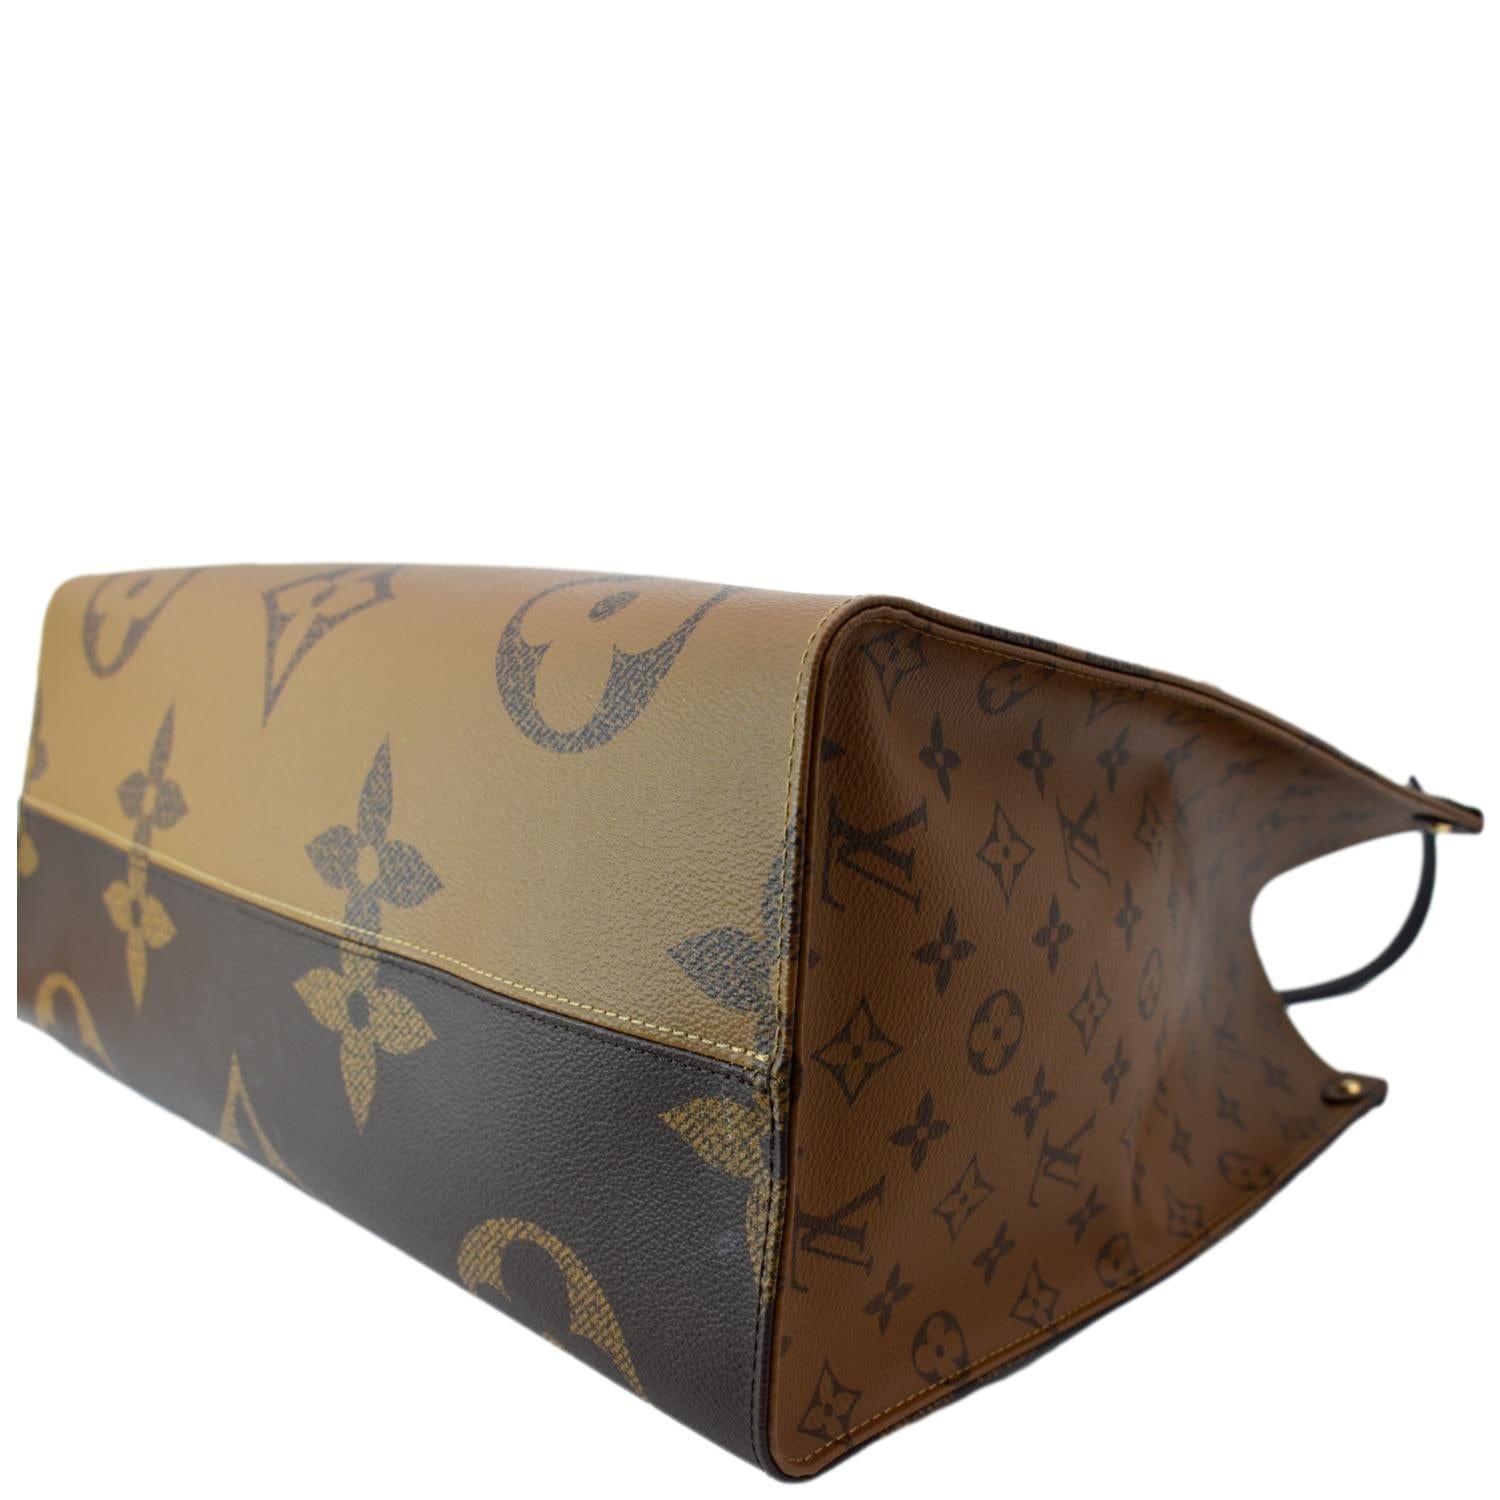 Louis Vuitton Onthego Giant Monogram Canvas Tote Shoulder Bag